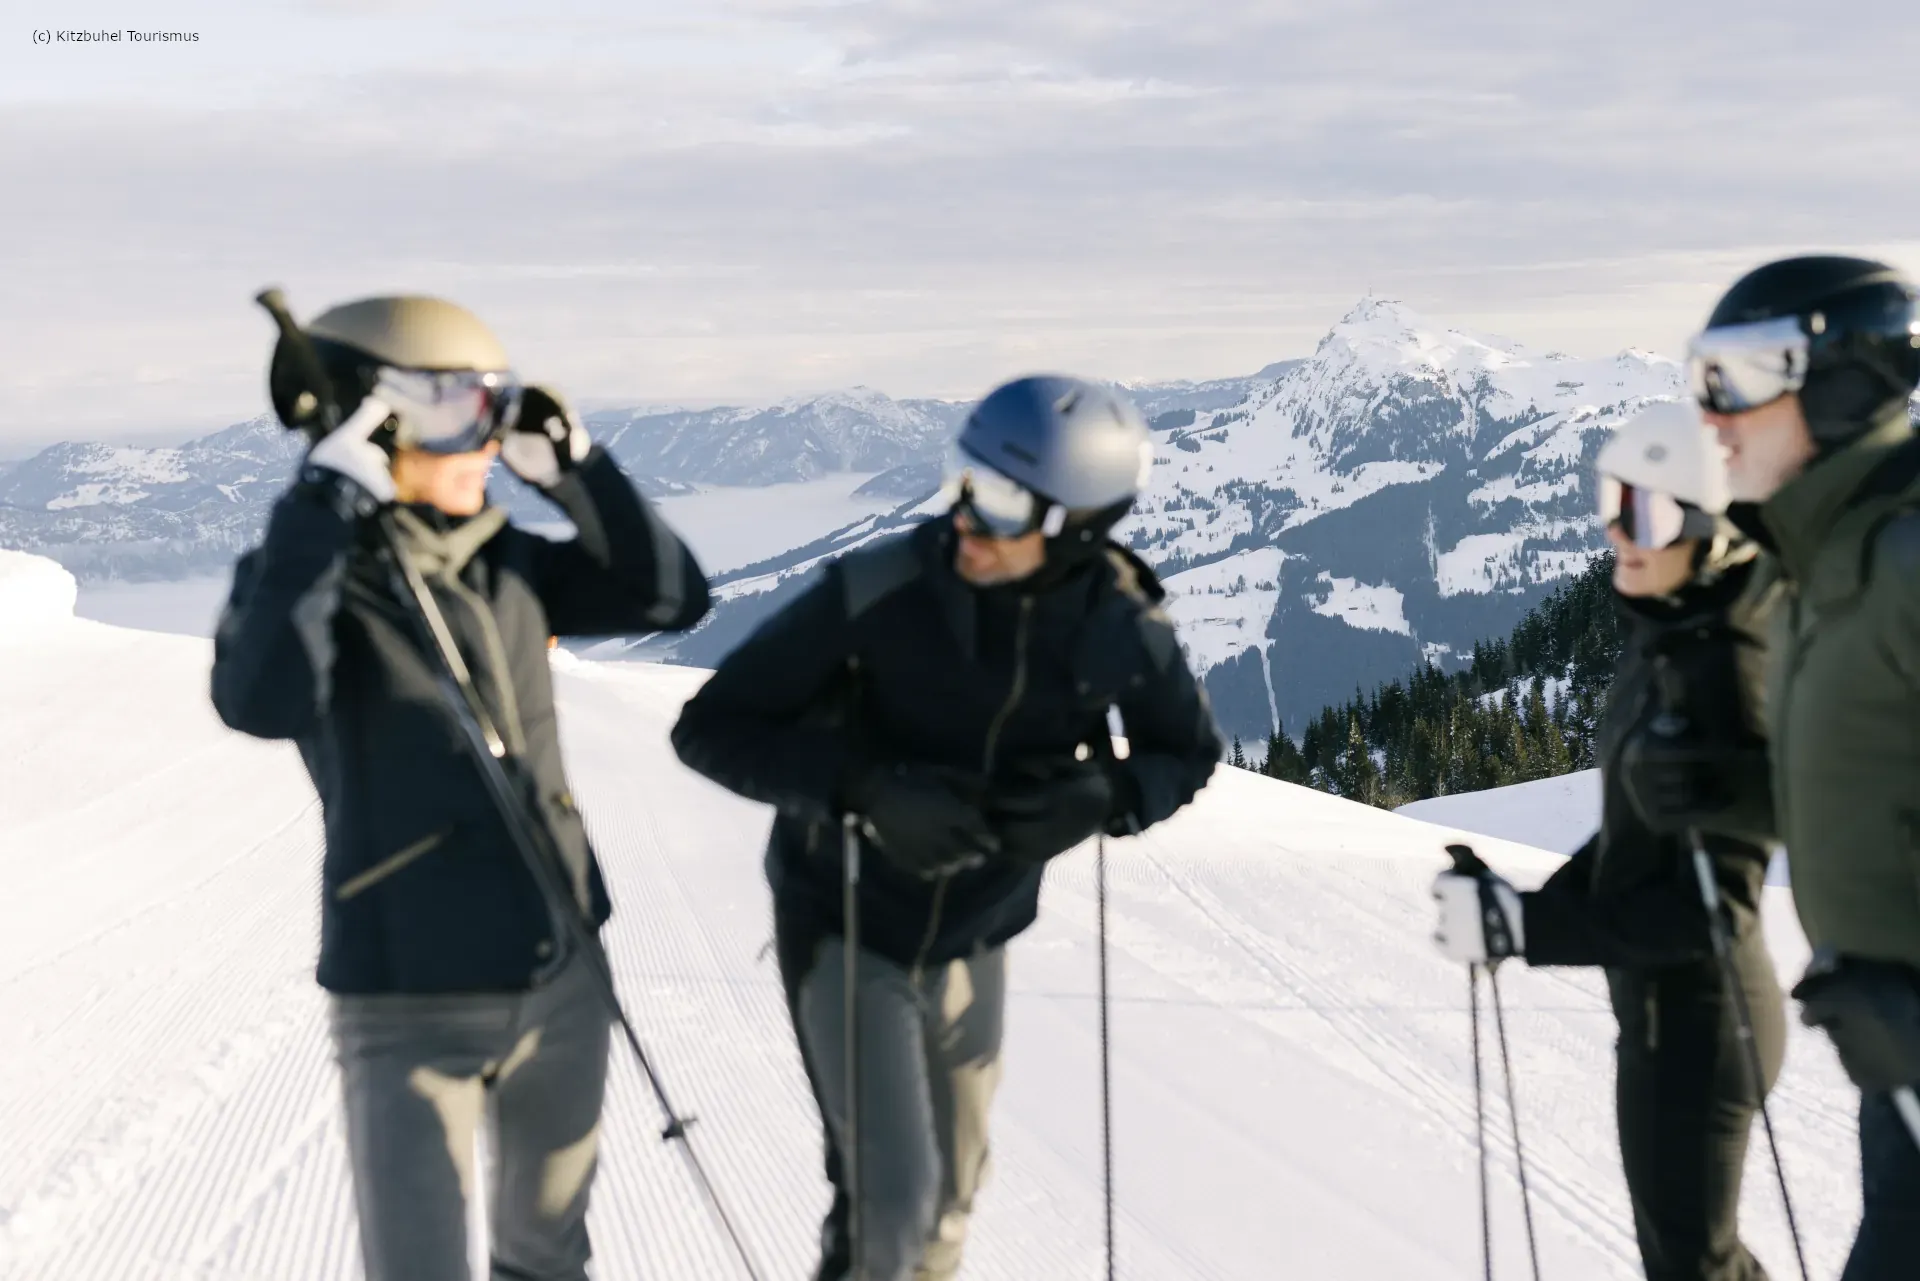 Skiers chatting atop Kitzbuhel ski resort